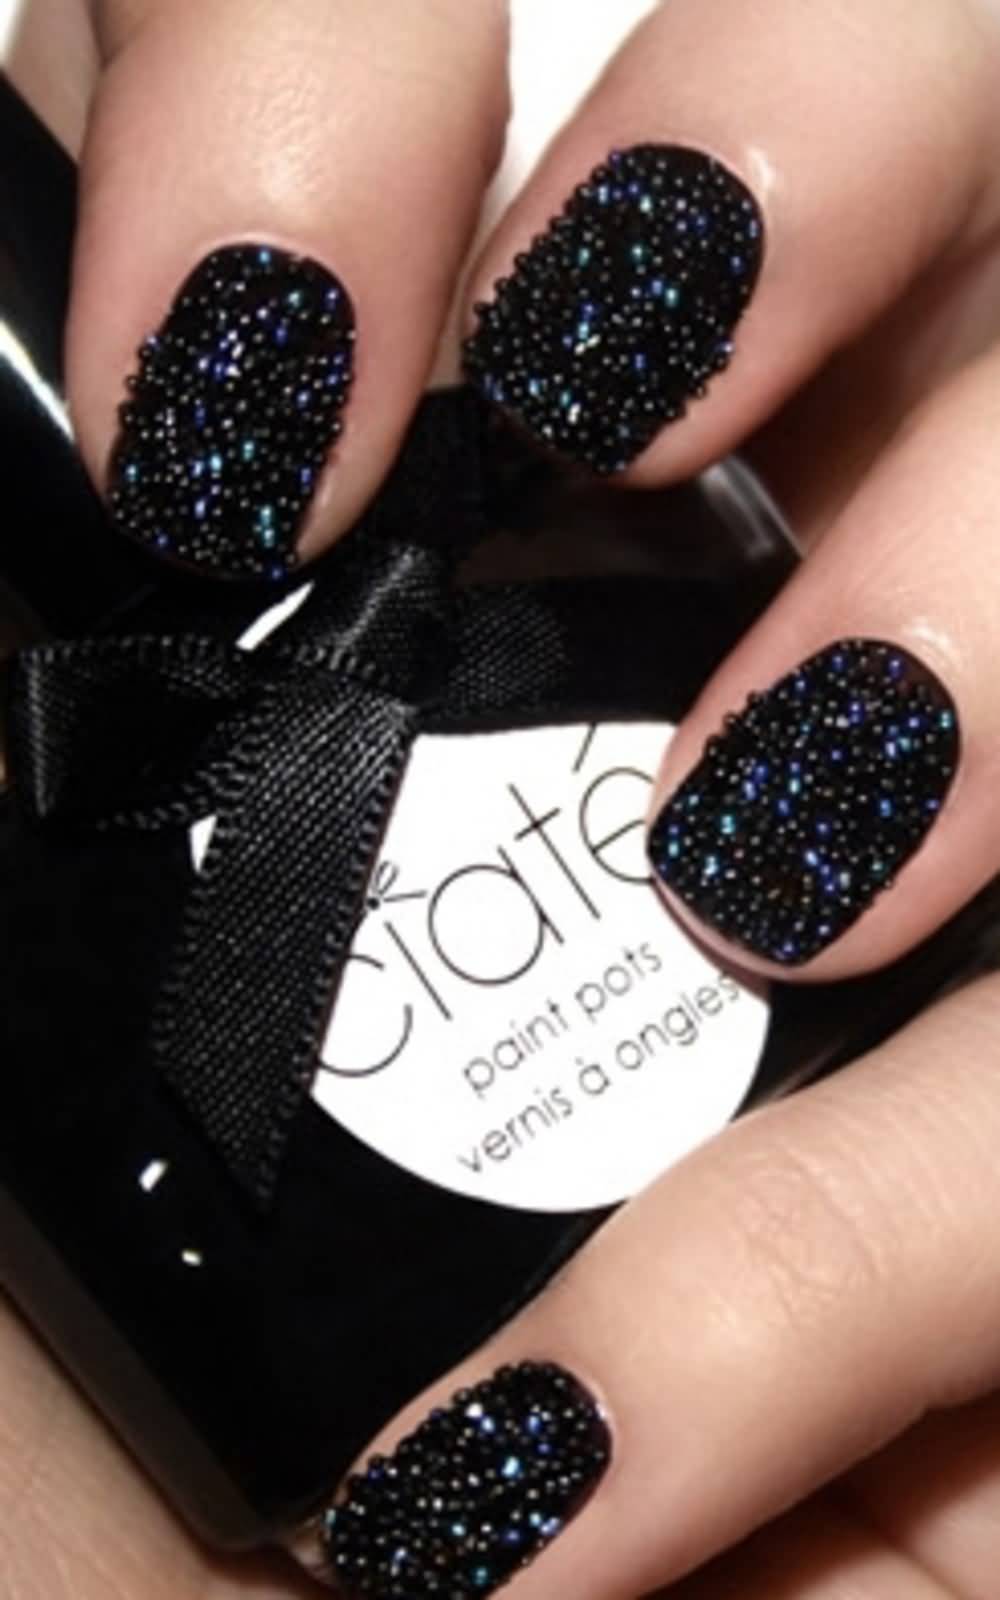 caviar nail polish4 +15 Hottest Caviar Manicure Creative Ideas to Apply - 20